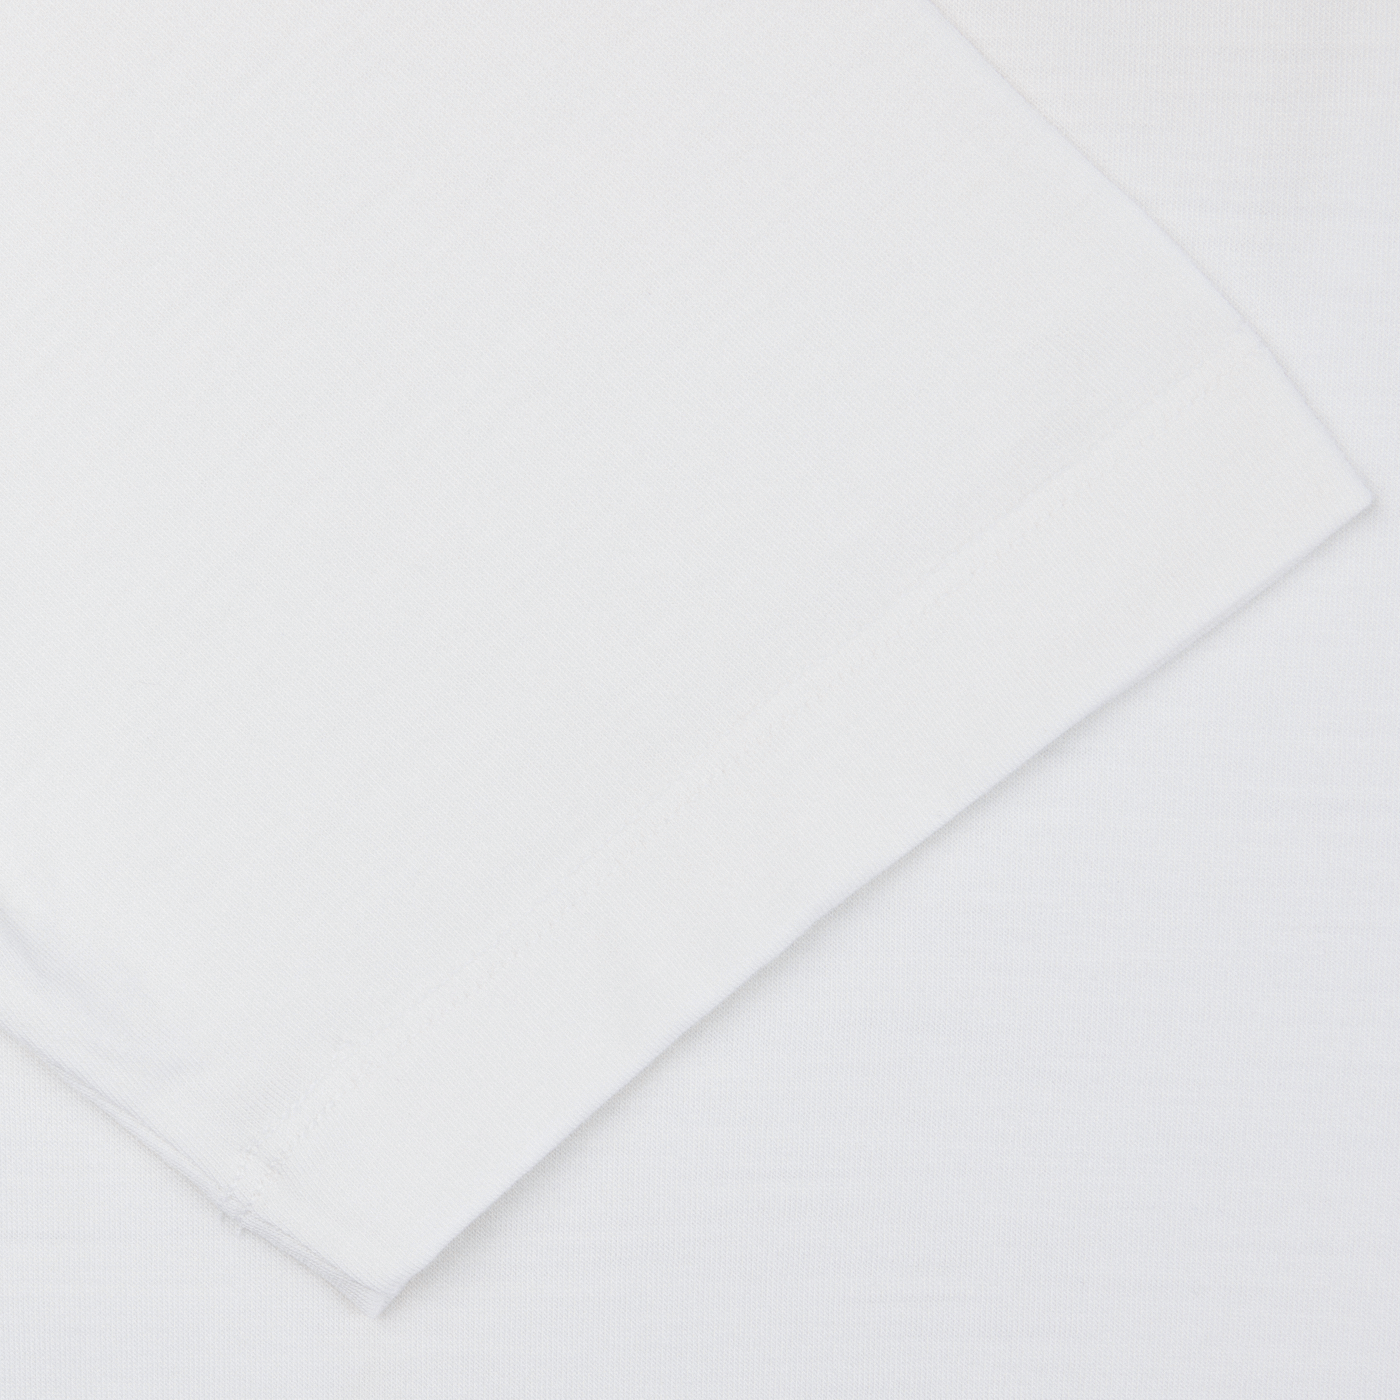 Off-White Merino Wool T-Shirt by Mazzarelli folded on a plain white background.